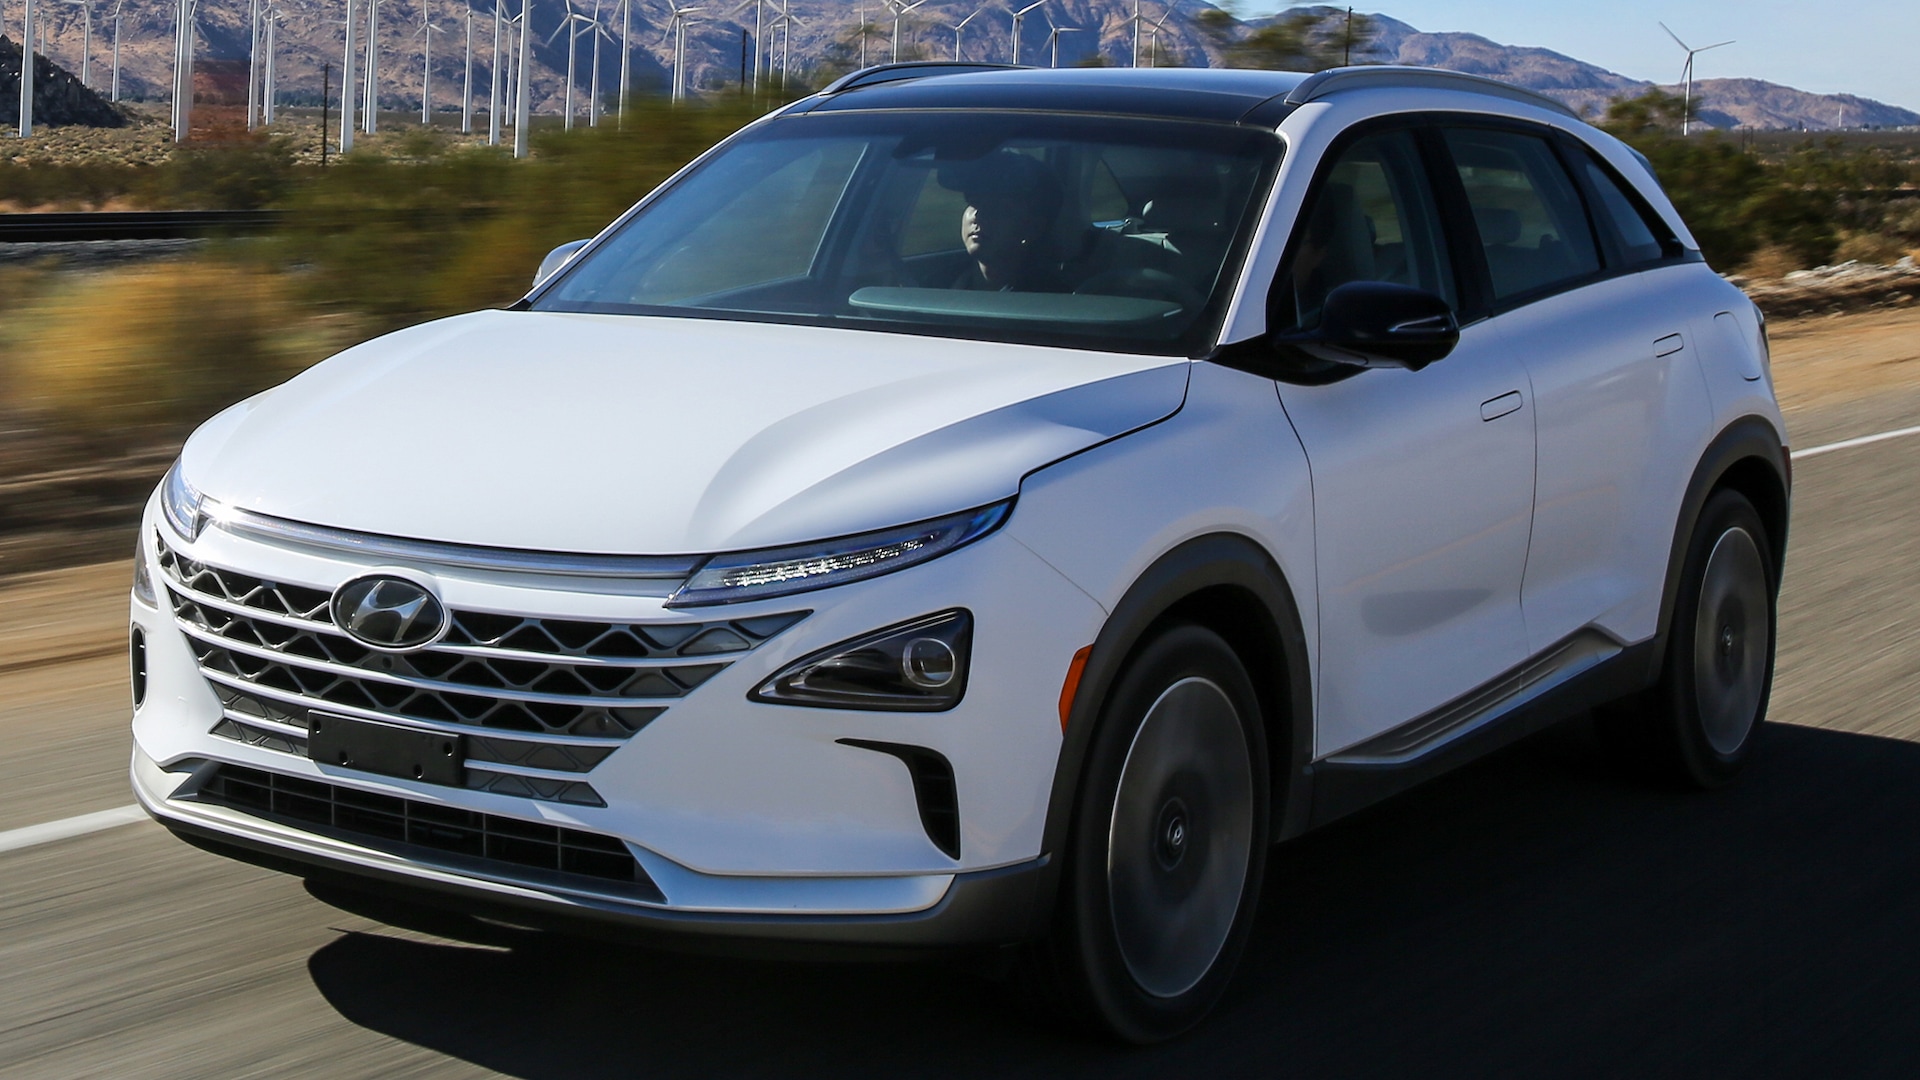 2022 Hyundai Nexo Prices, Reviews, and Photos - MotorTrend